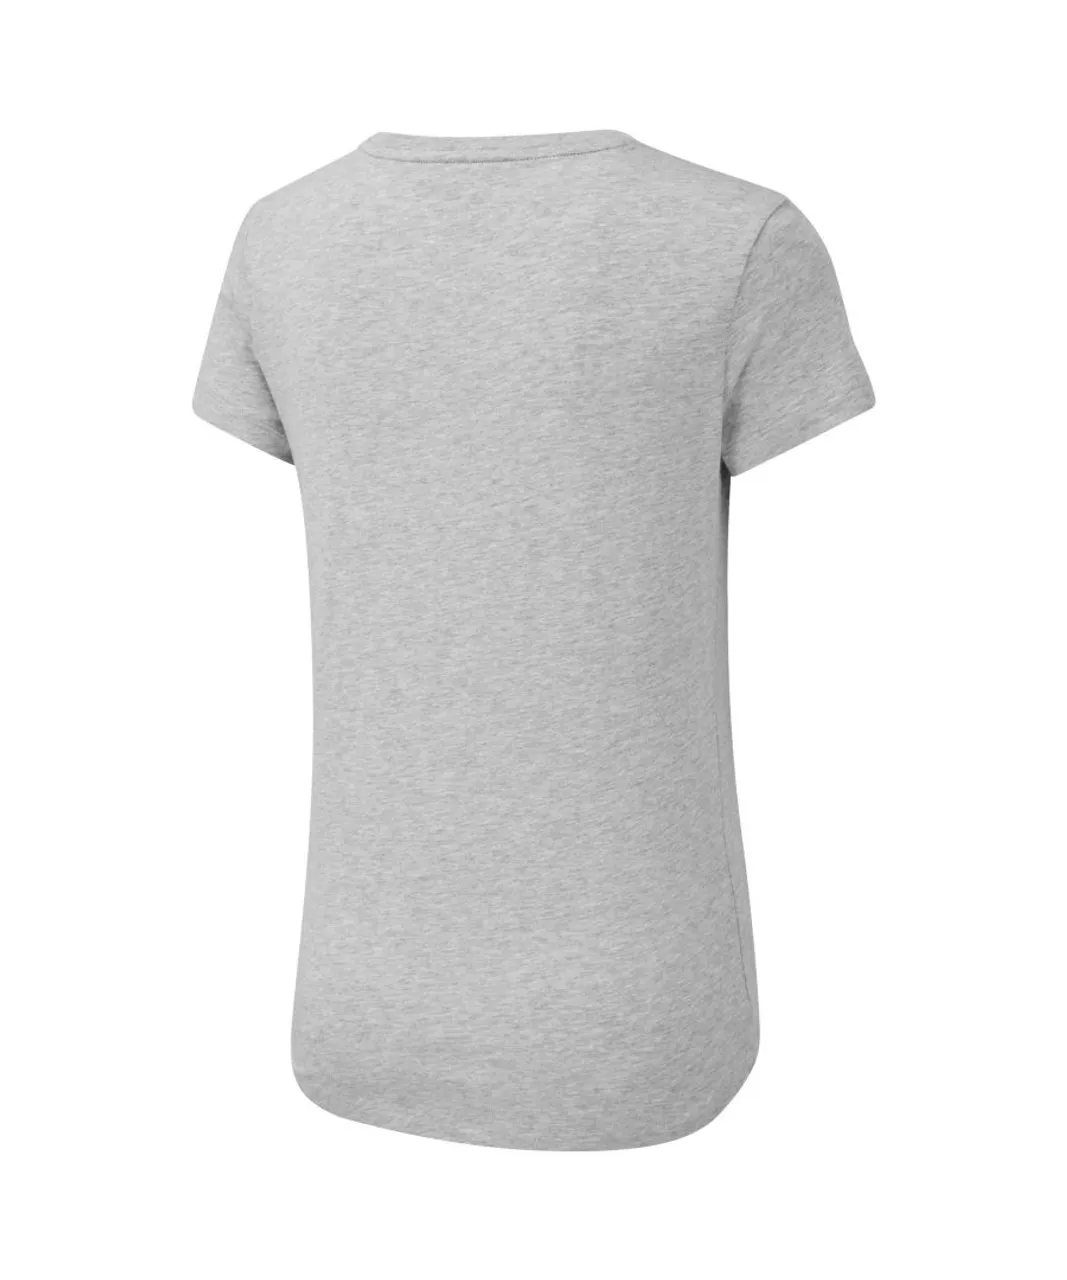 Puma Womens Essentials Tee T-Shirt - Light Grey Cotton